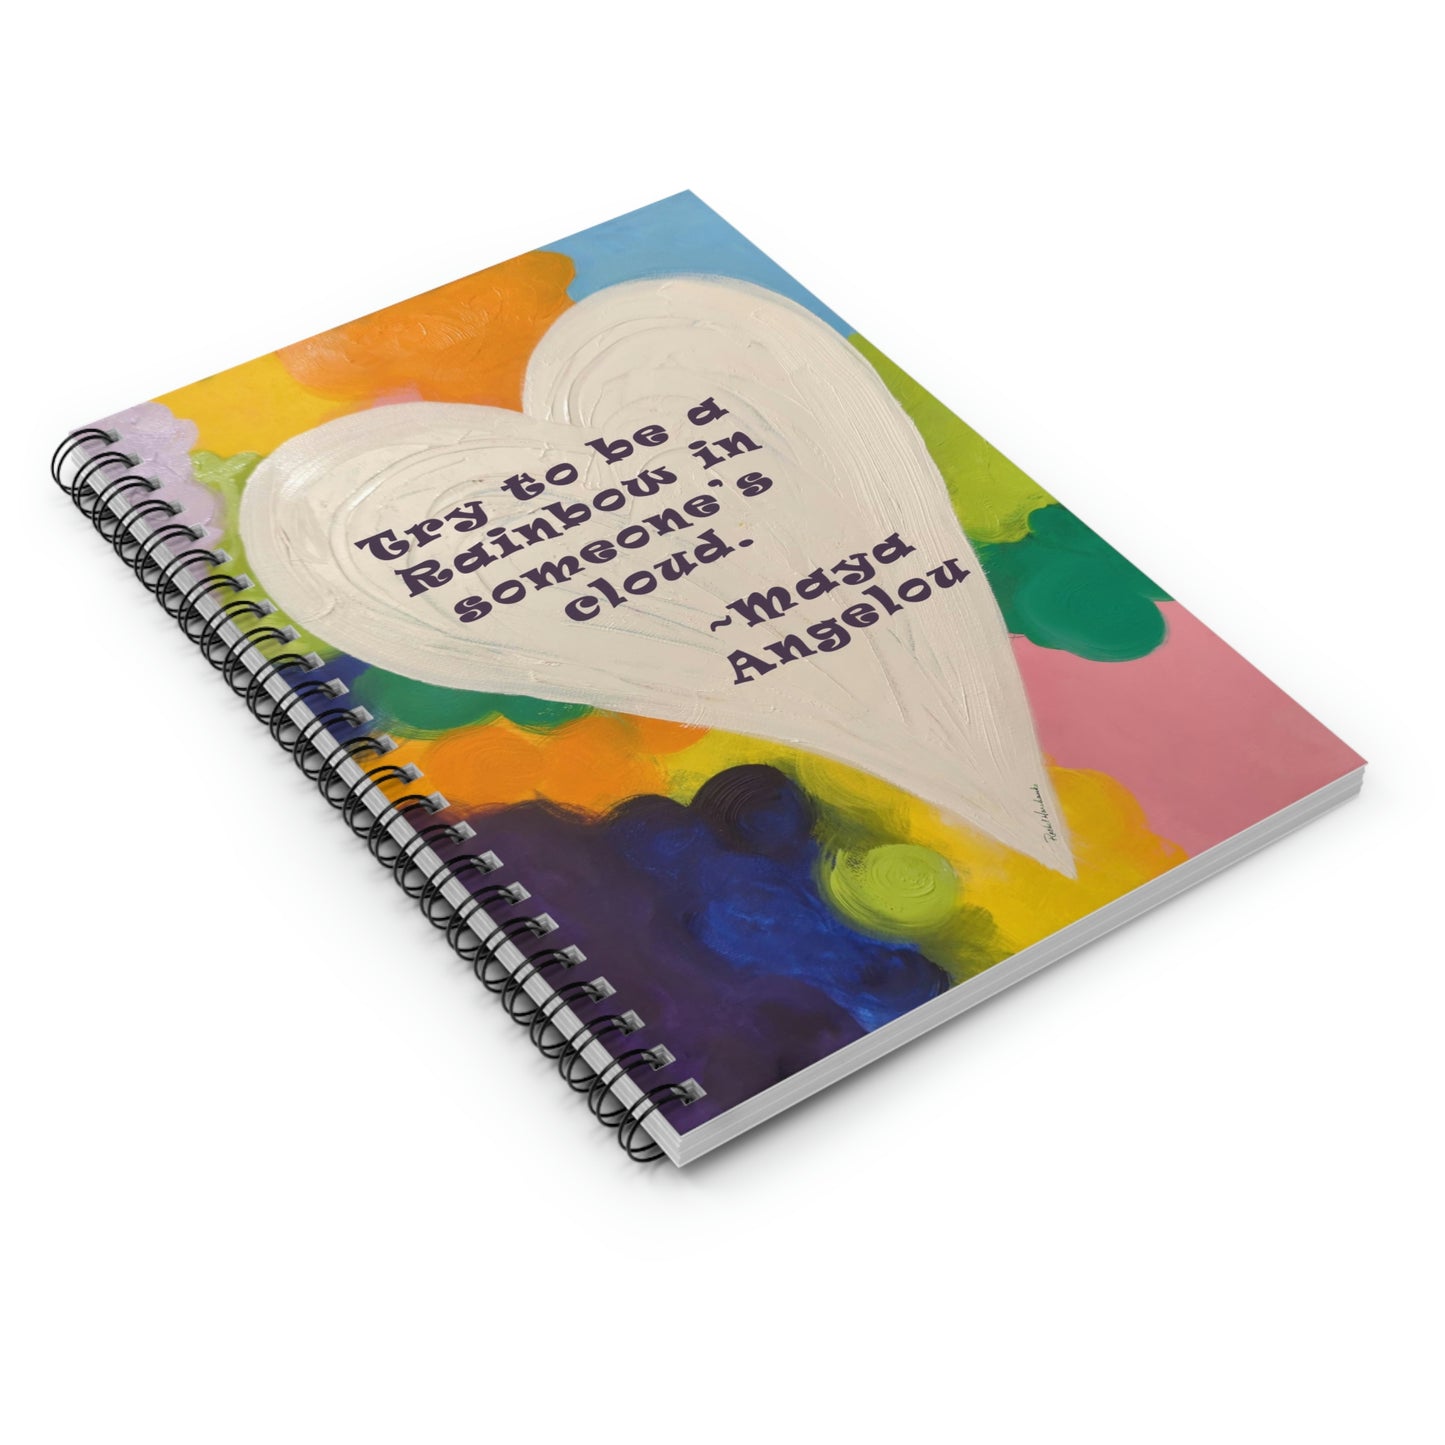 Rainbow Heart Spiral Notebook - Ruled Line